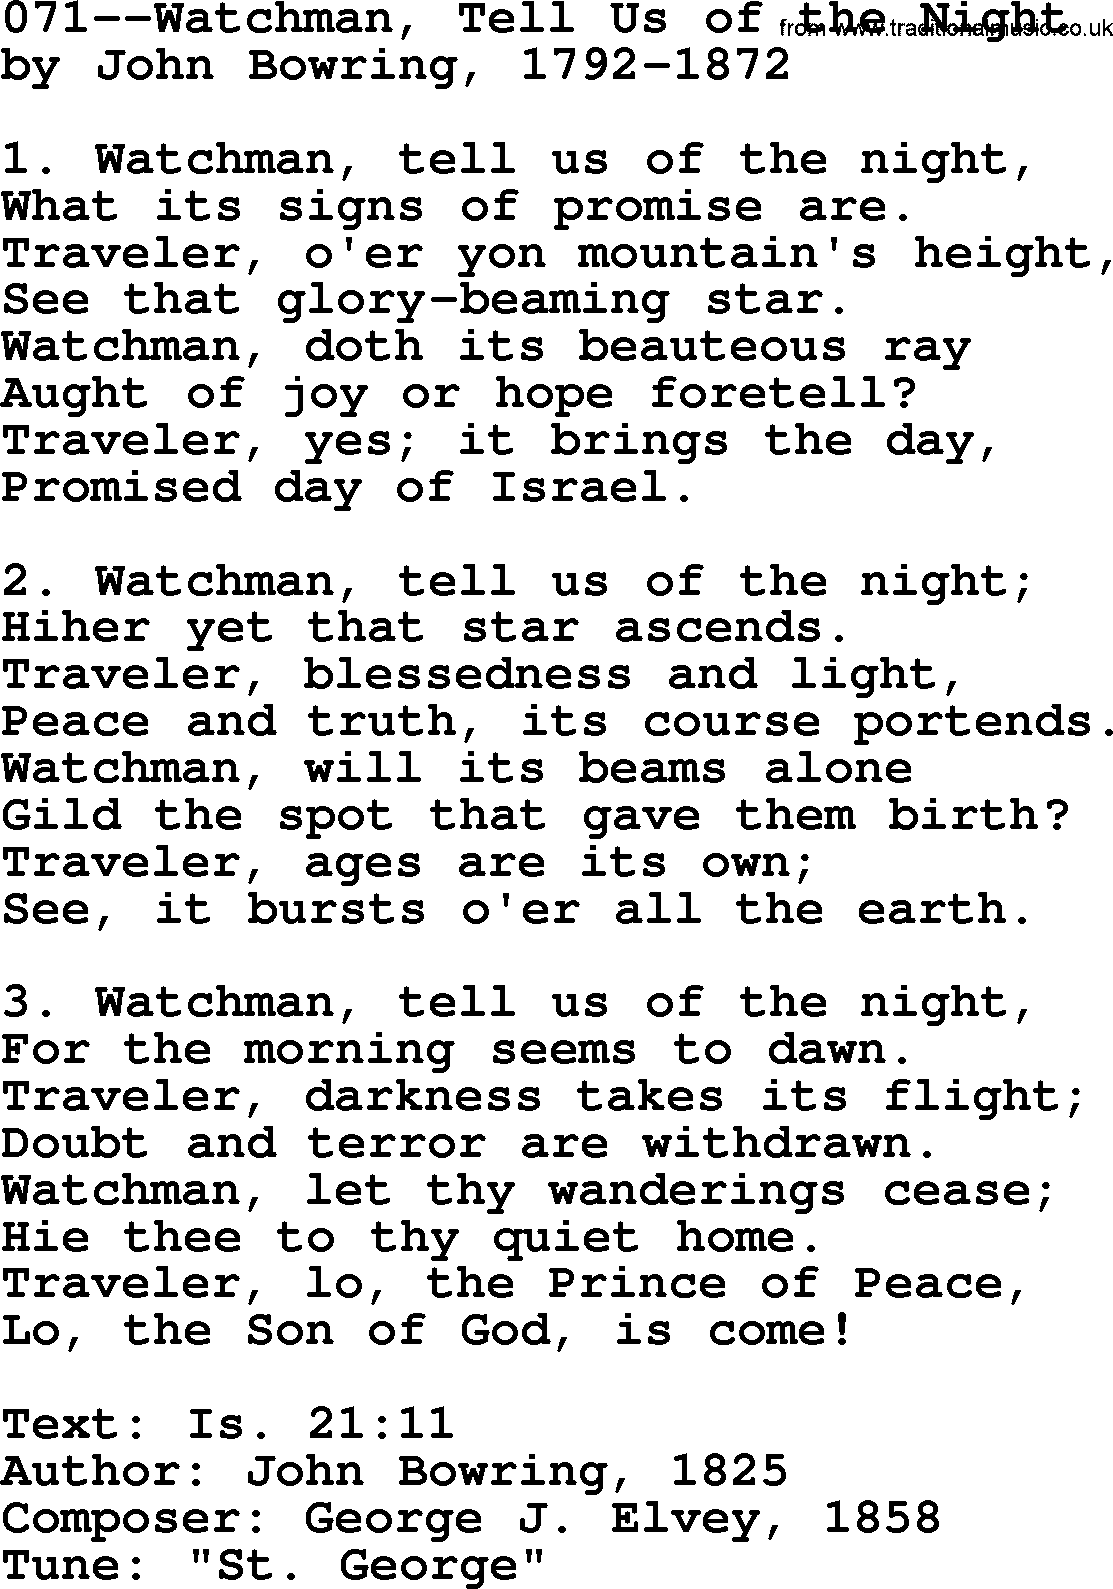 Lutheran Hymn: 071--Watchman, Tell Us of the Night.txt lyrics with PDF